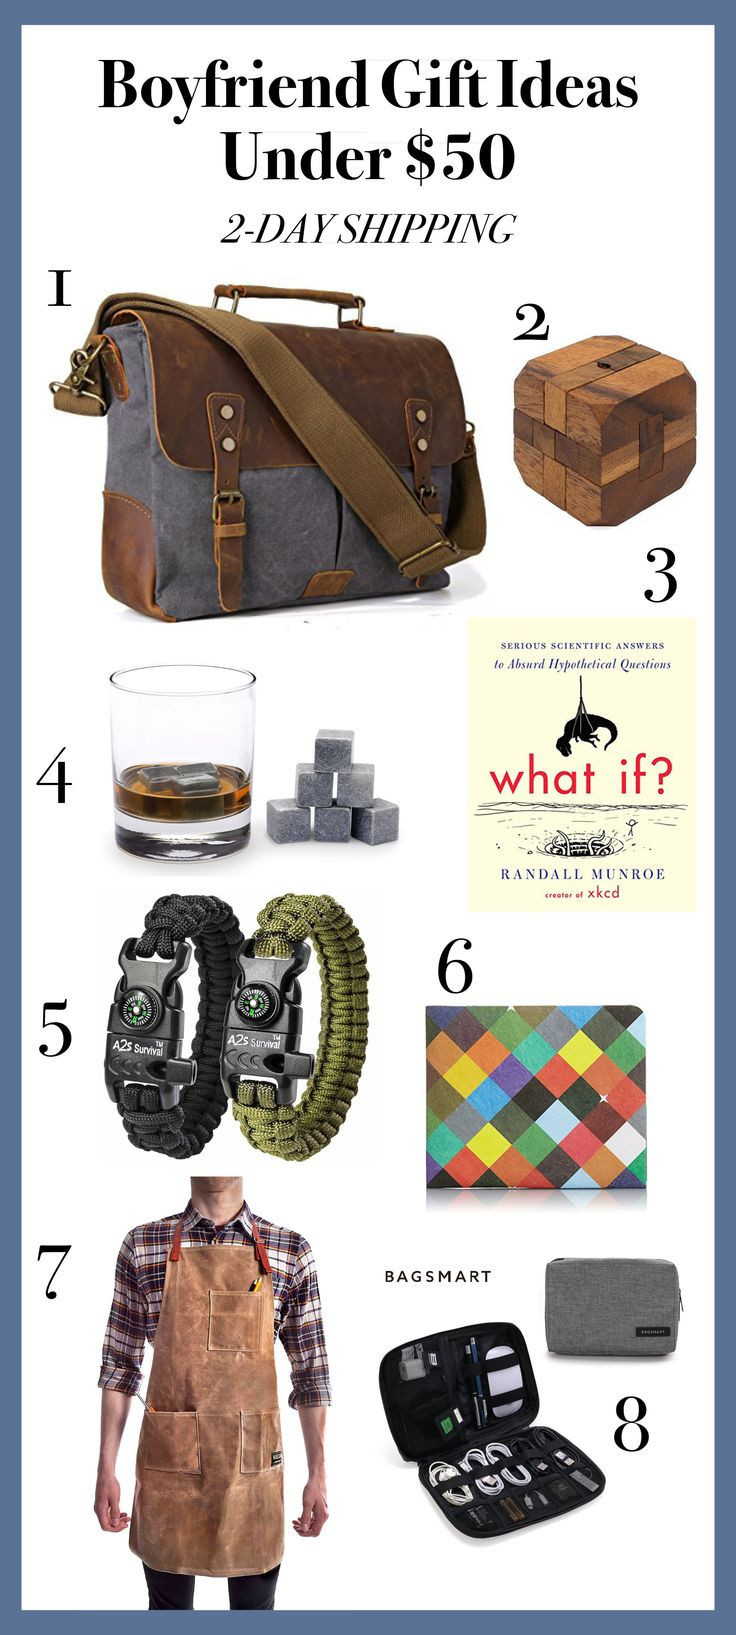 Nerdy Gift Ideas For Boyfriend
 Top 25 Gift Ideas for Nerdy Boyfriend Home Family